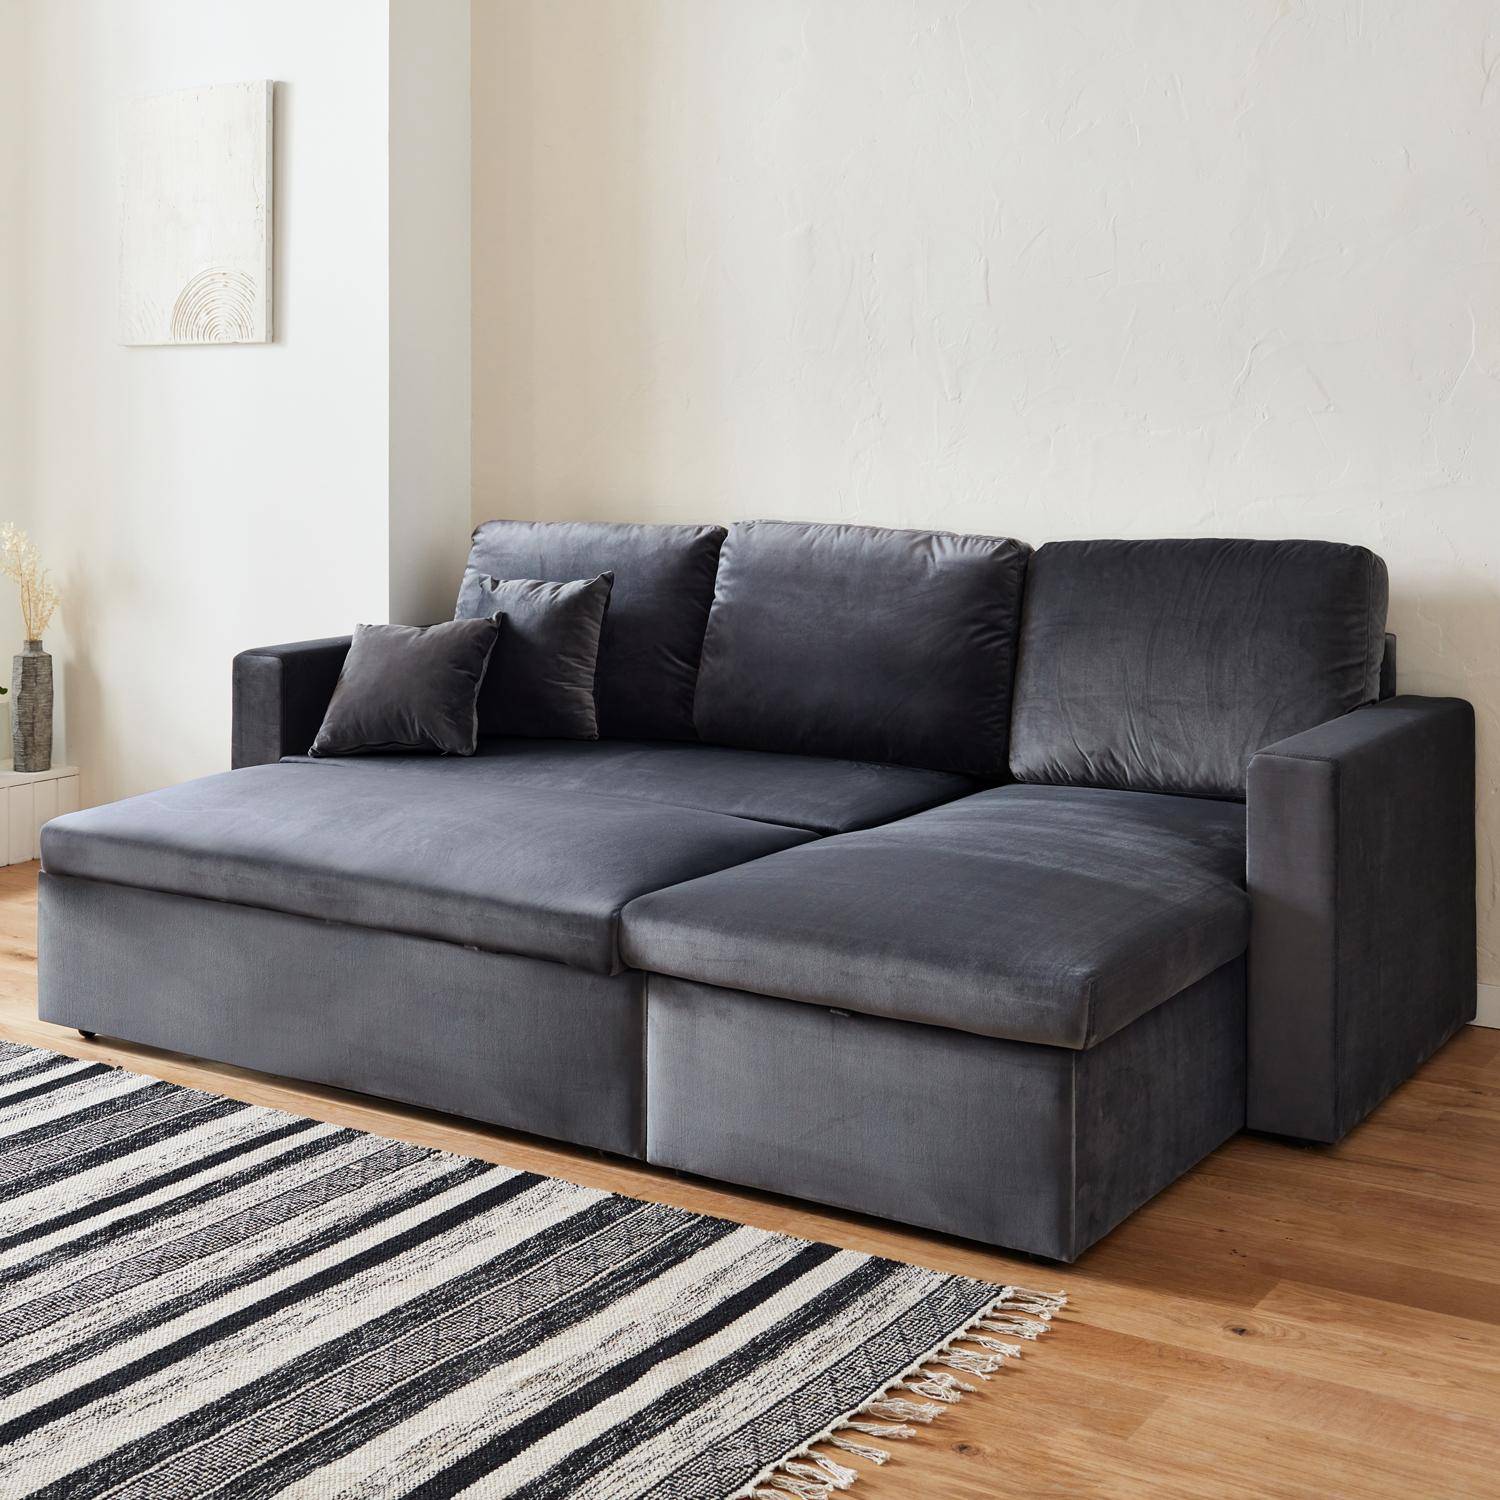 Dark grey velvet 3-seater convertible corner sofa, reversible corner armchair, storage box, modular bed,sweeek,Photo3